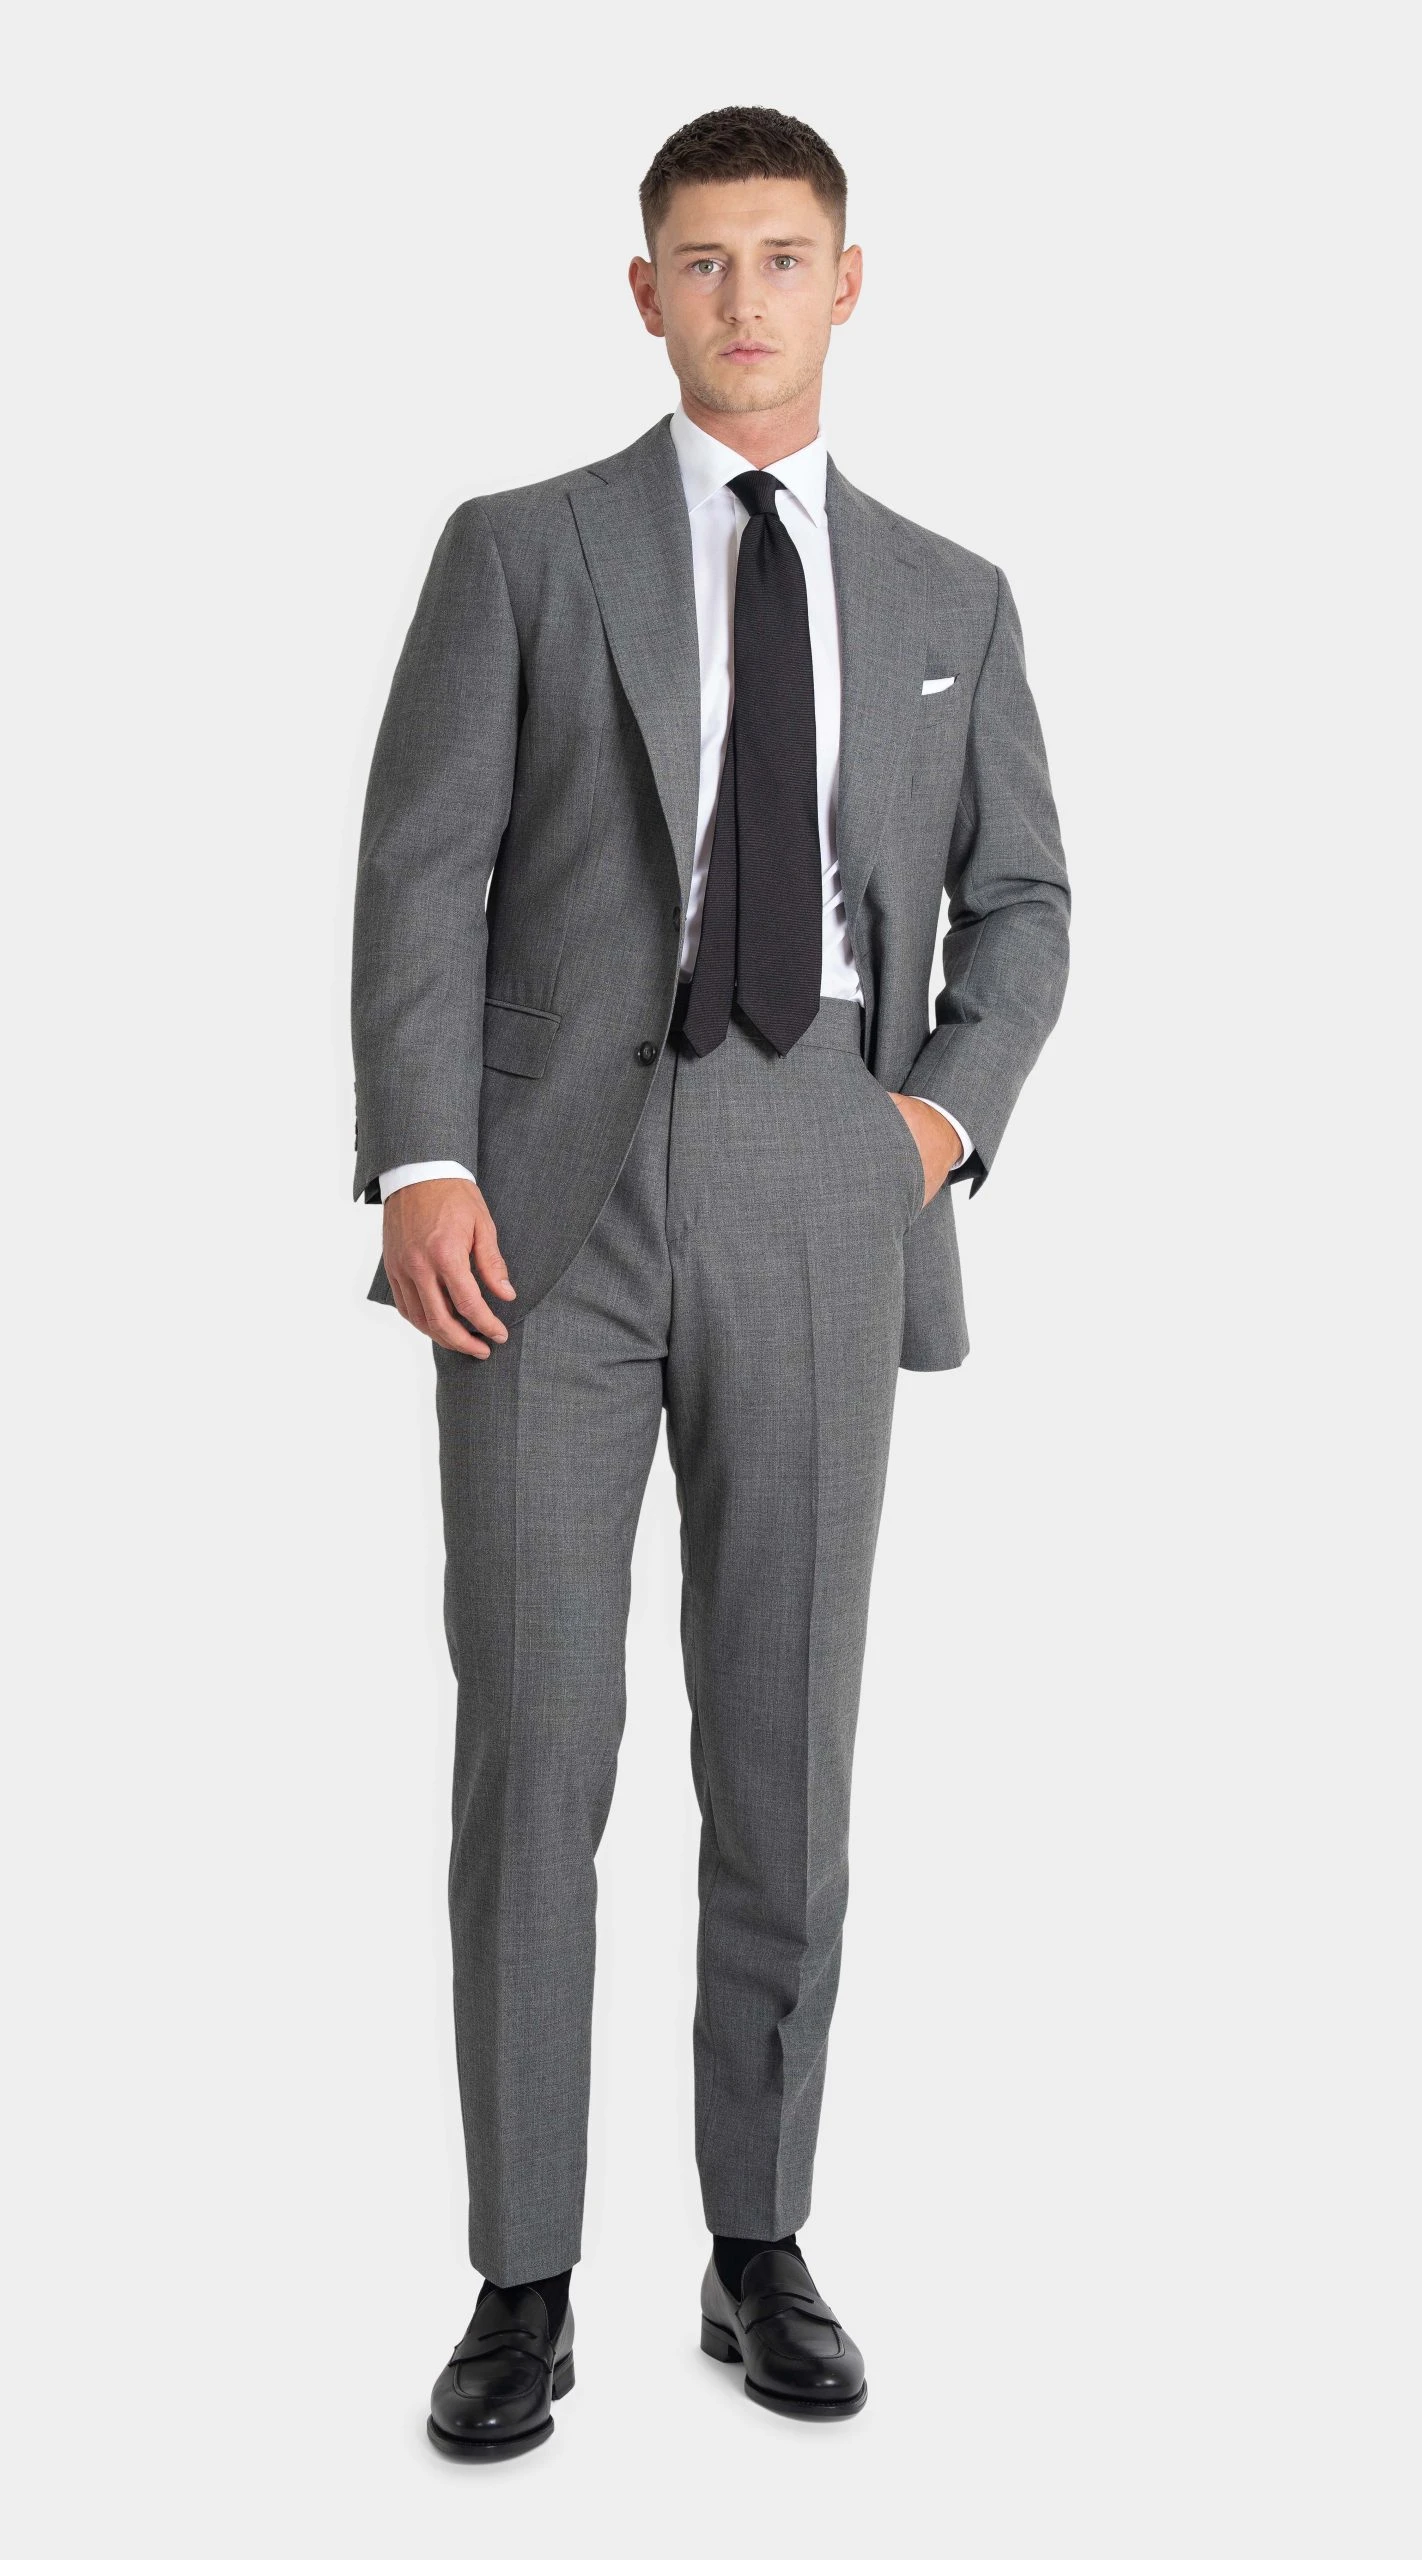 Medium Grey TwistAir Suit with olive green tie